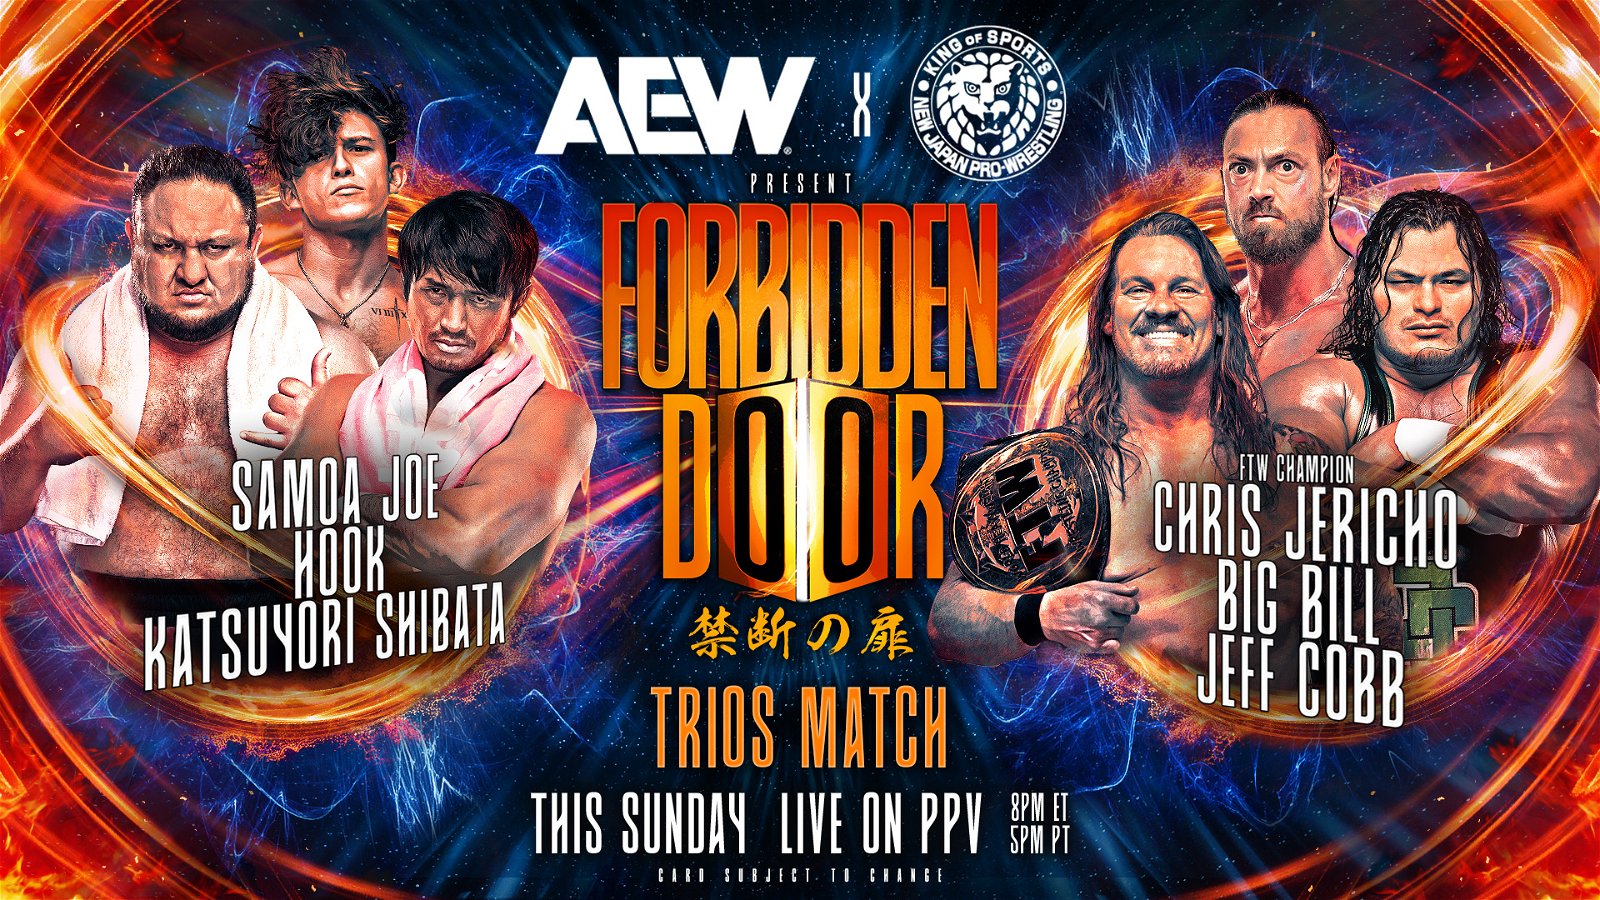 Jeff Cobb will team with Chris Jericho and Big Bill at AEW x NJPW Forbidden Door